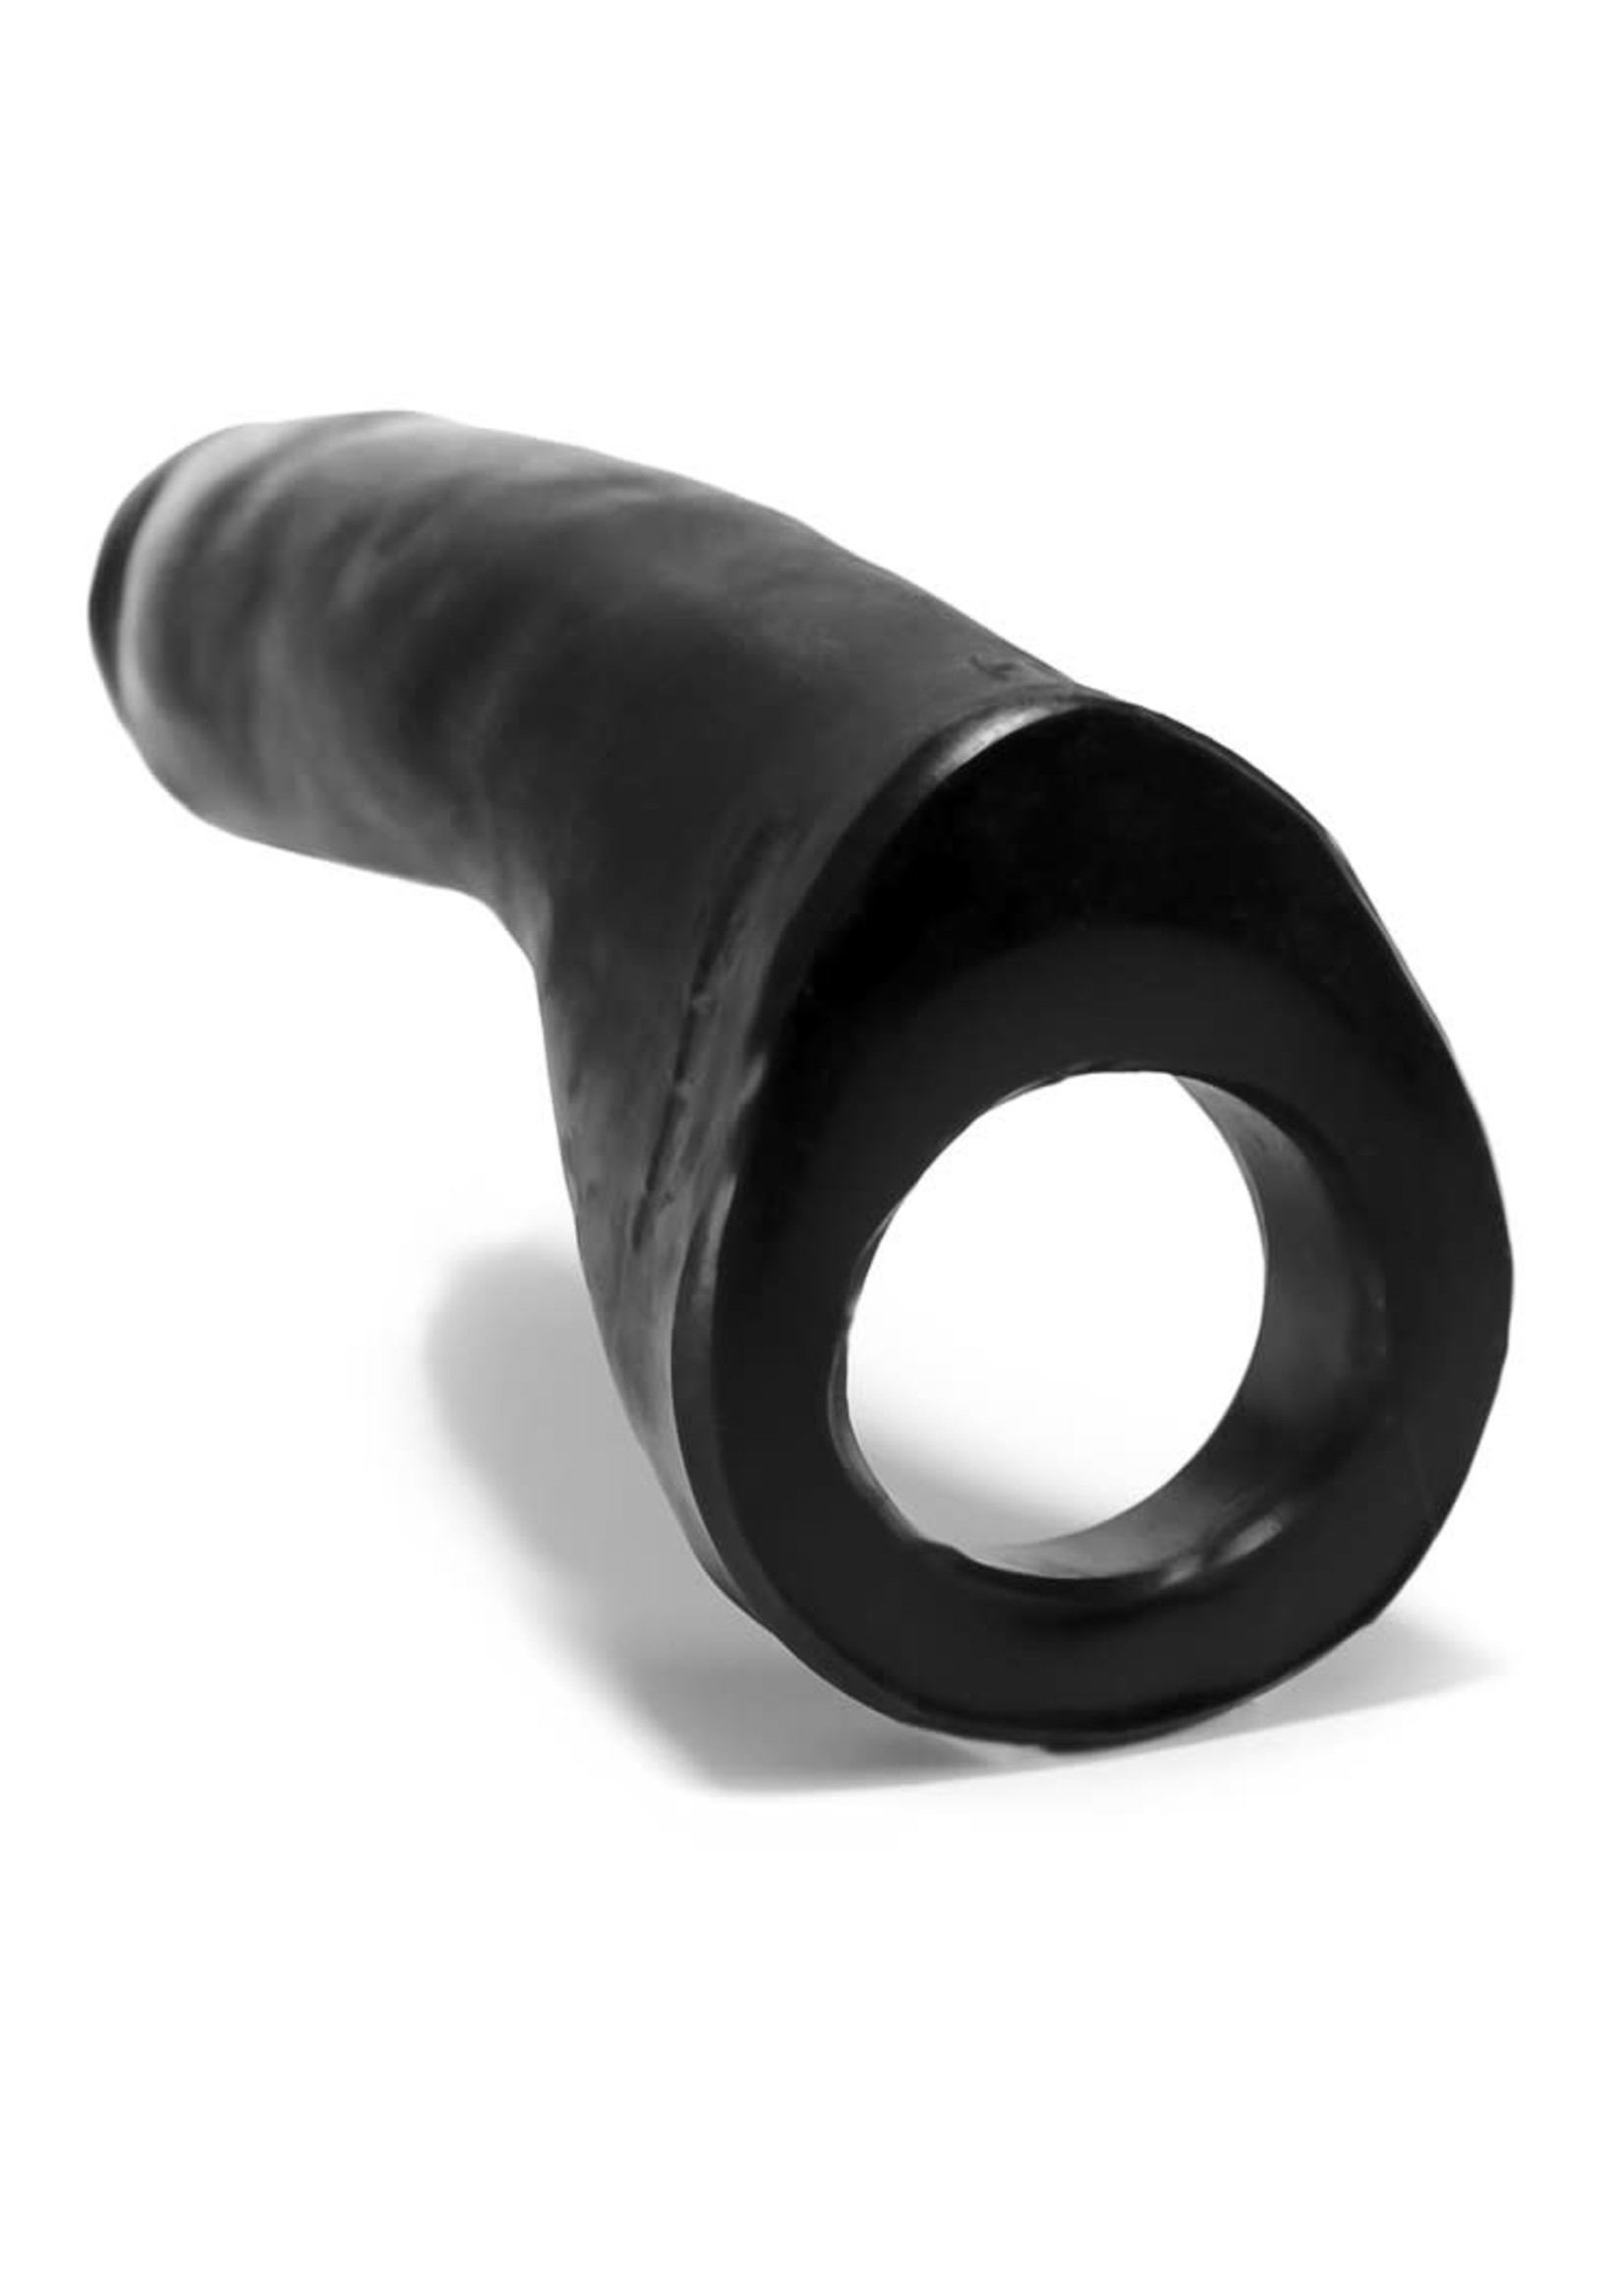 OX Balls Oxballs Penetrator Silicone Cock Ring Dildo 7in - Black